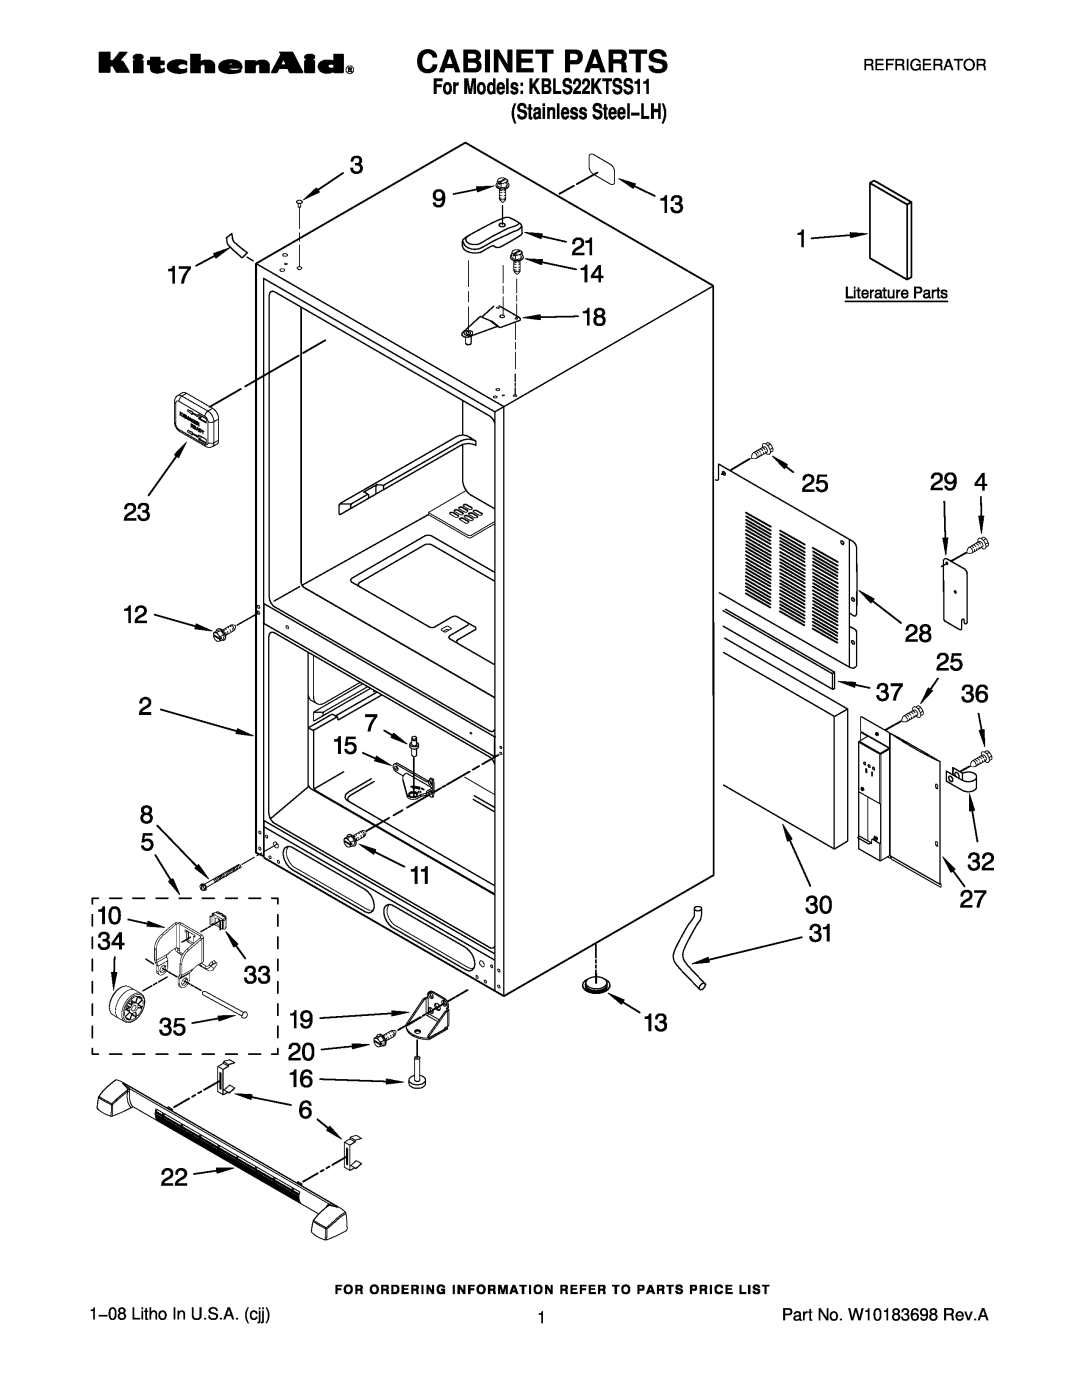 KitchenAid manual Cabinet Parts, 1−08 Litho In U.S.A. cjj, For Models KBLS22KTSS11 Stainless Steel−LH, Refrigerator 